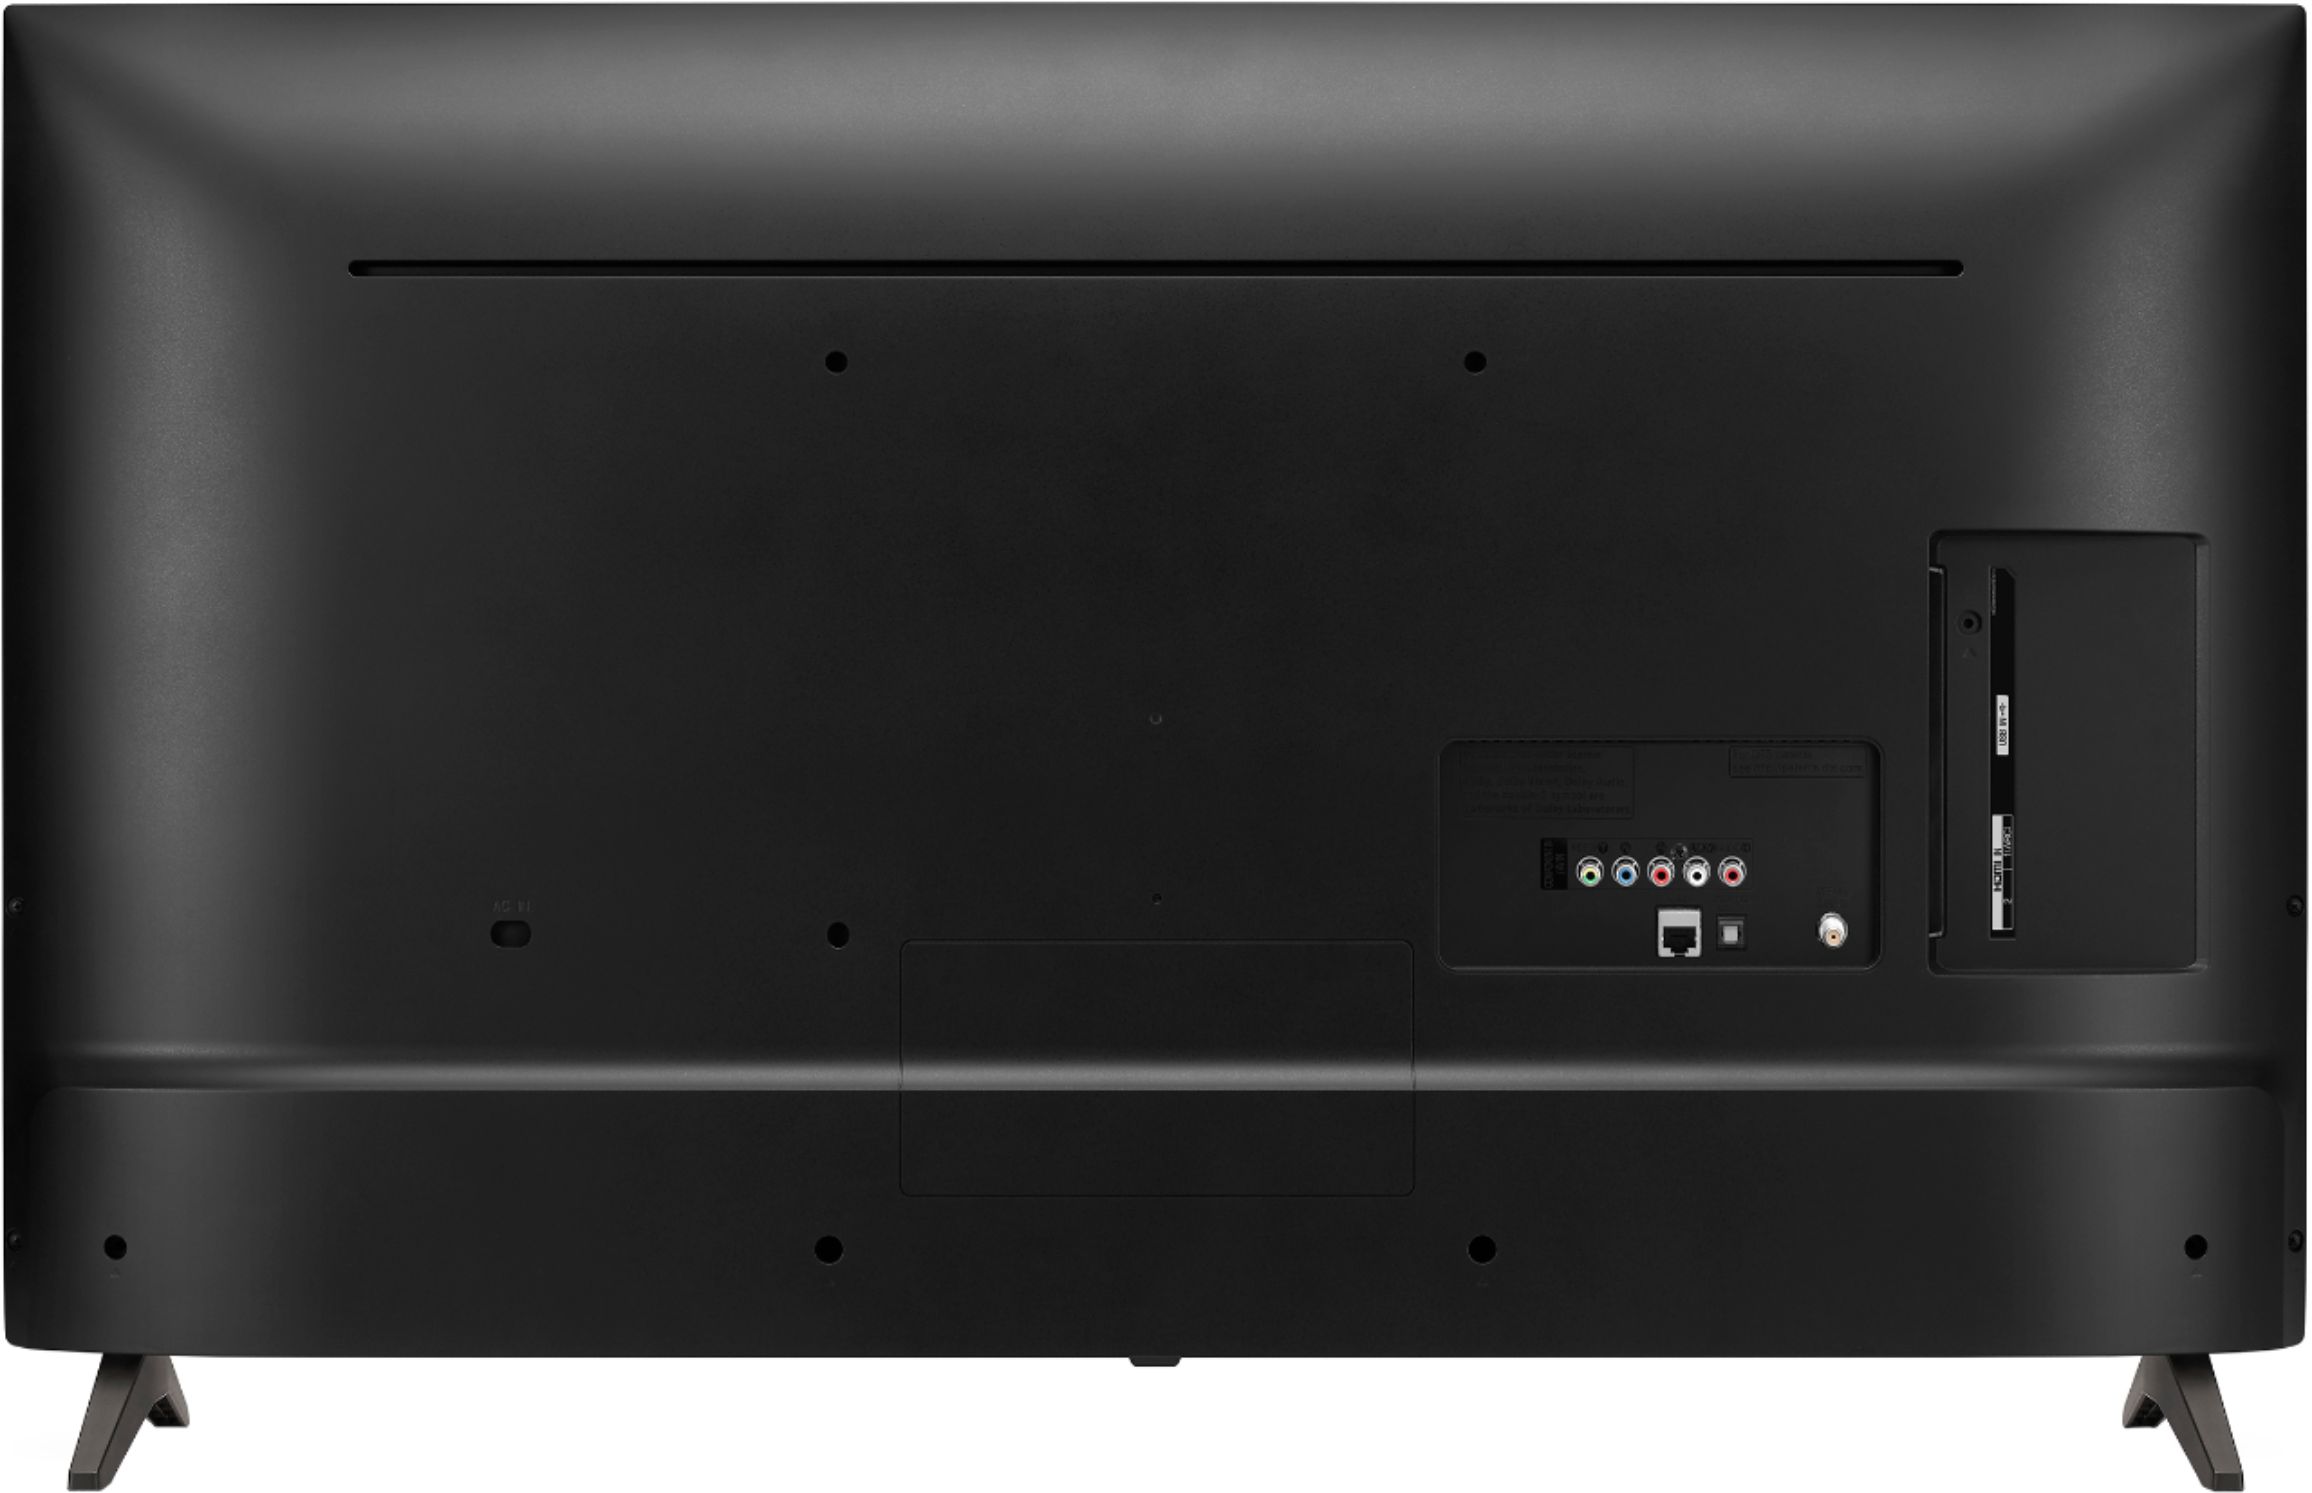 Back View: LG 32" Class HDR Smart LED HD 720p TV - Black